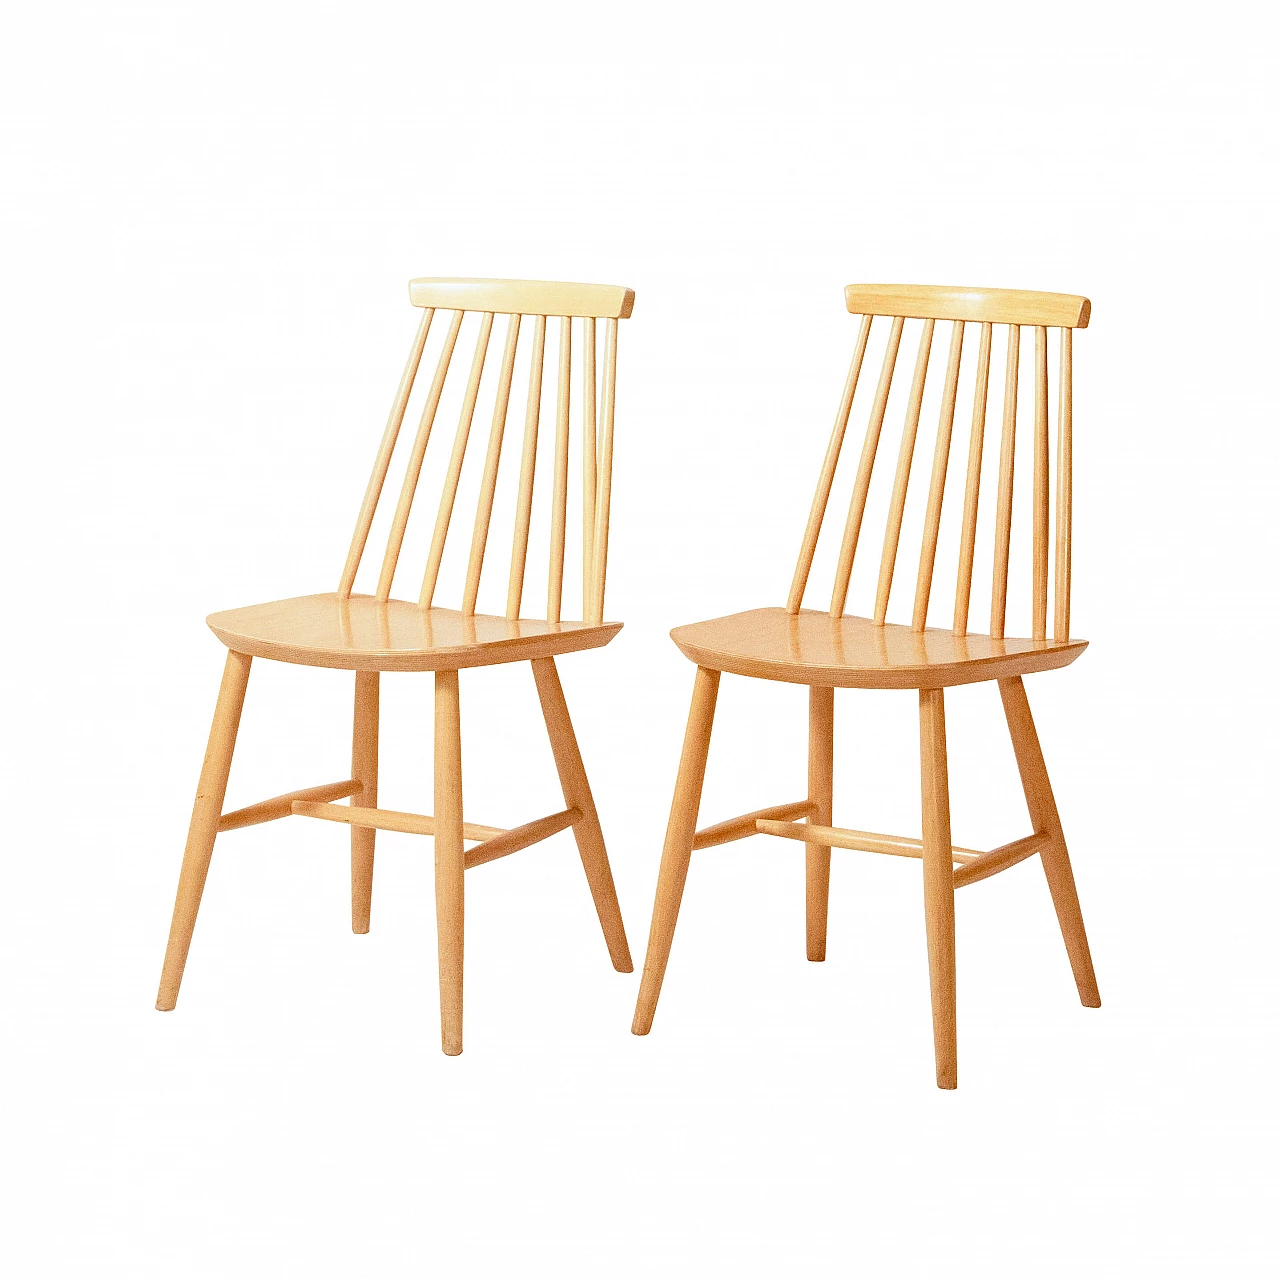 Pair of wooden chairs Pinnstolar 1123654